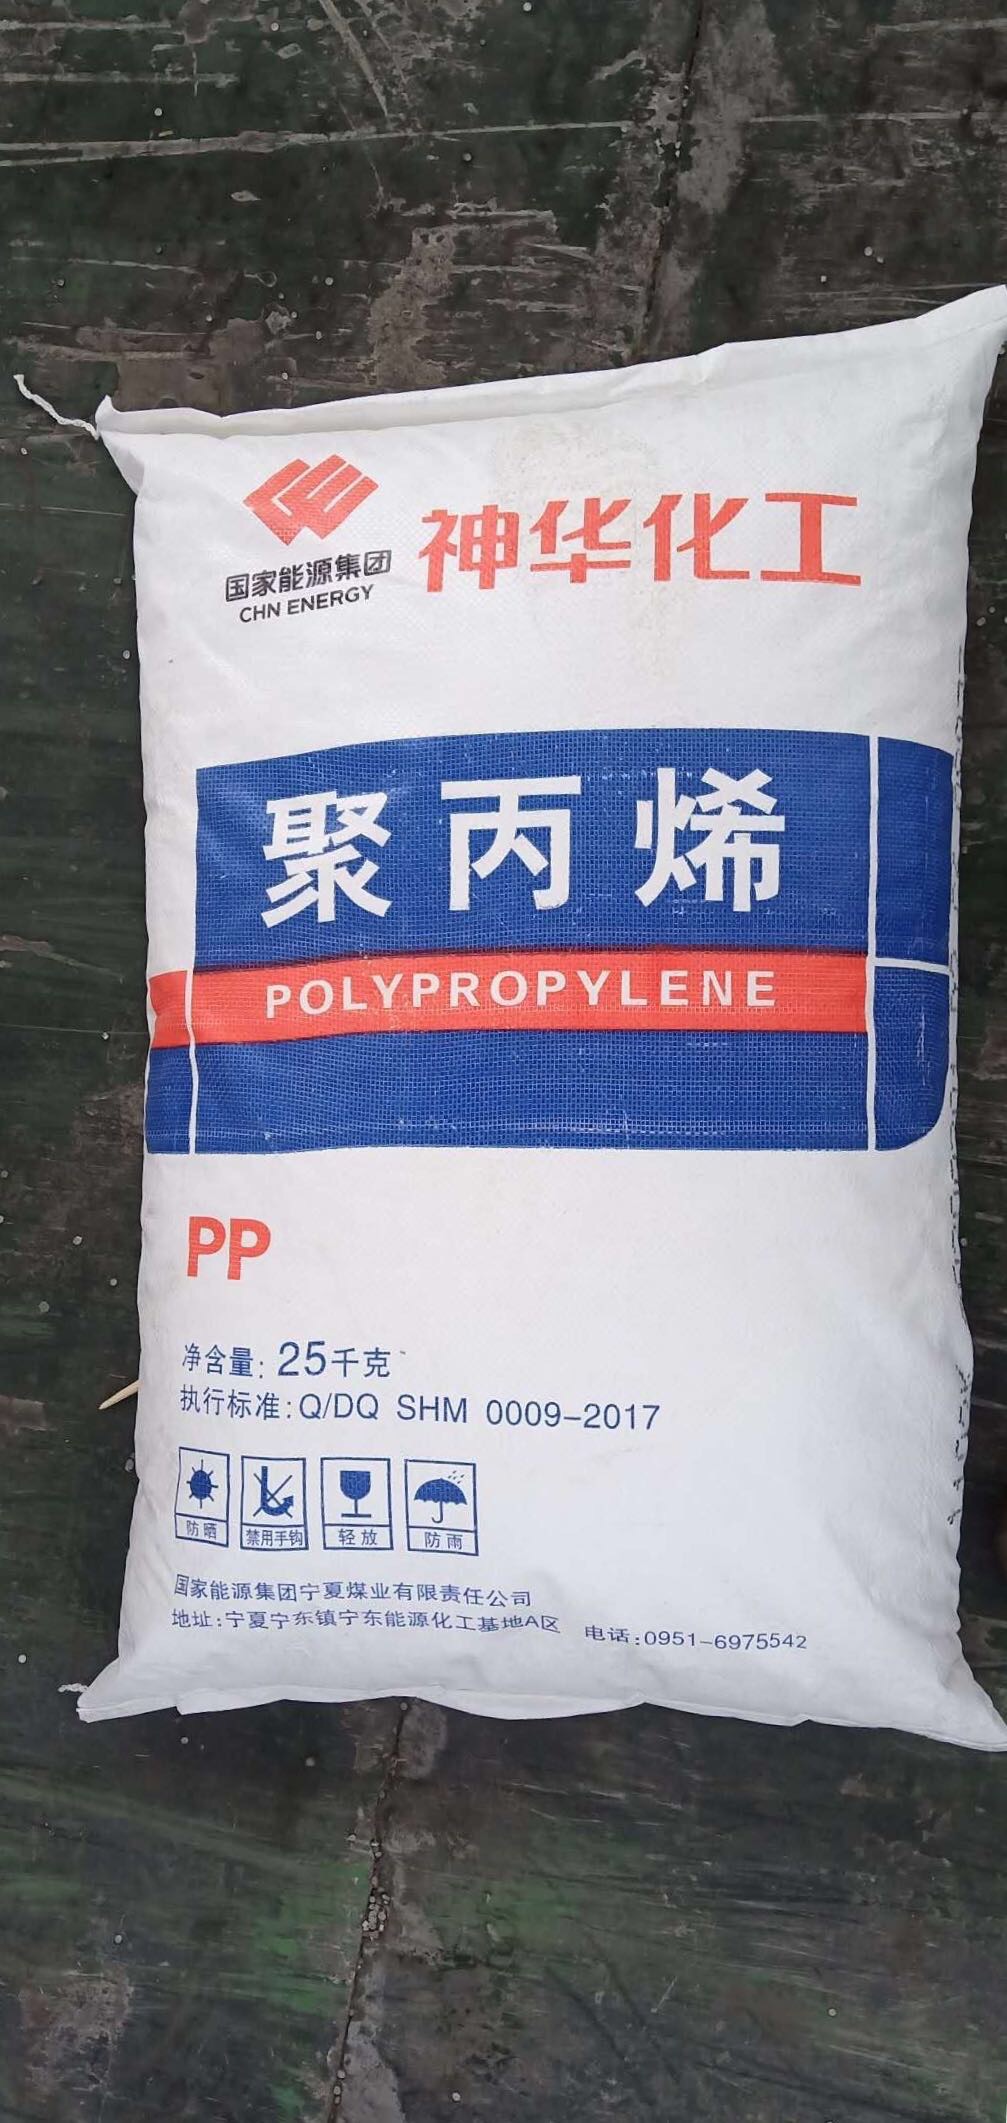 PP/神华宁煤/1102K拉丝级均聚物高强度纤维级聚丙烯原料20214A-1